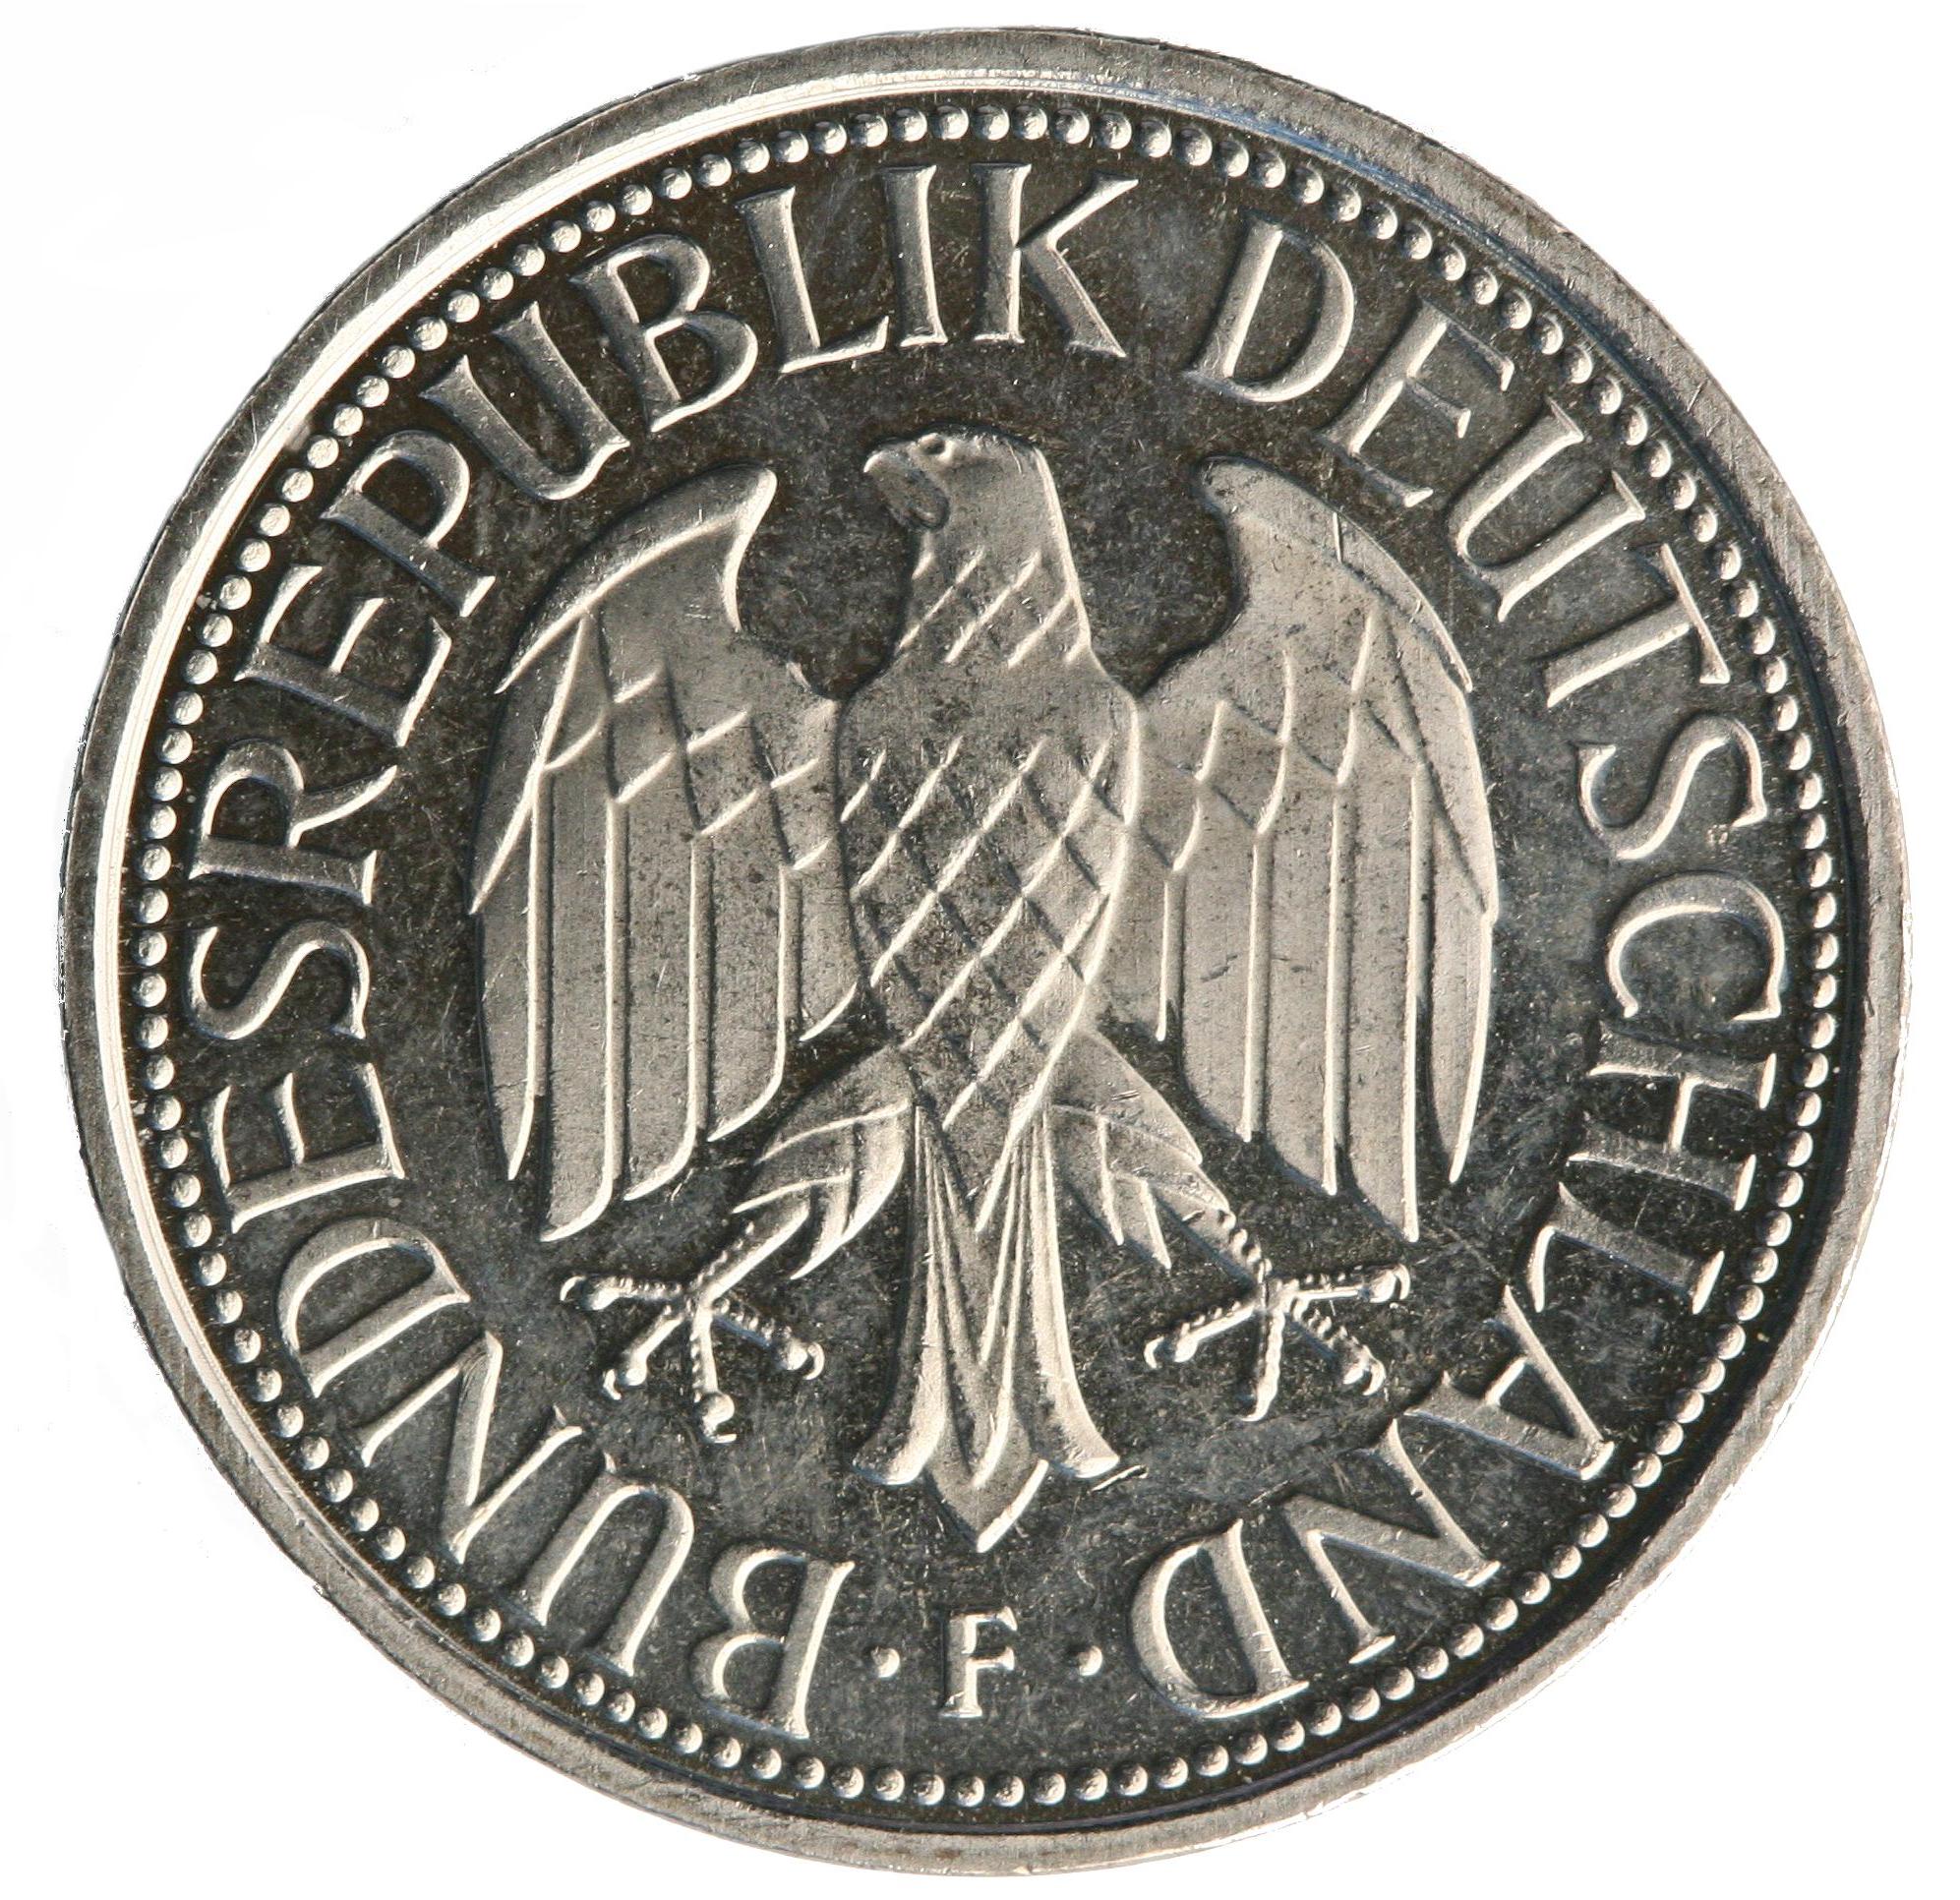 1-DM coin - reverse